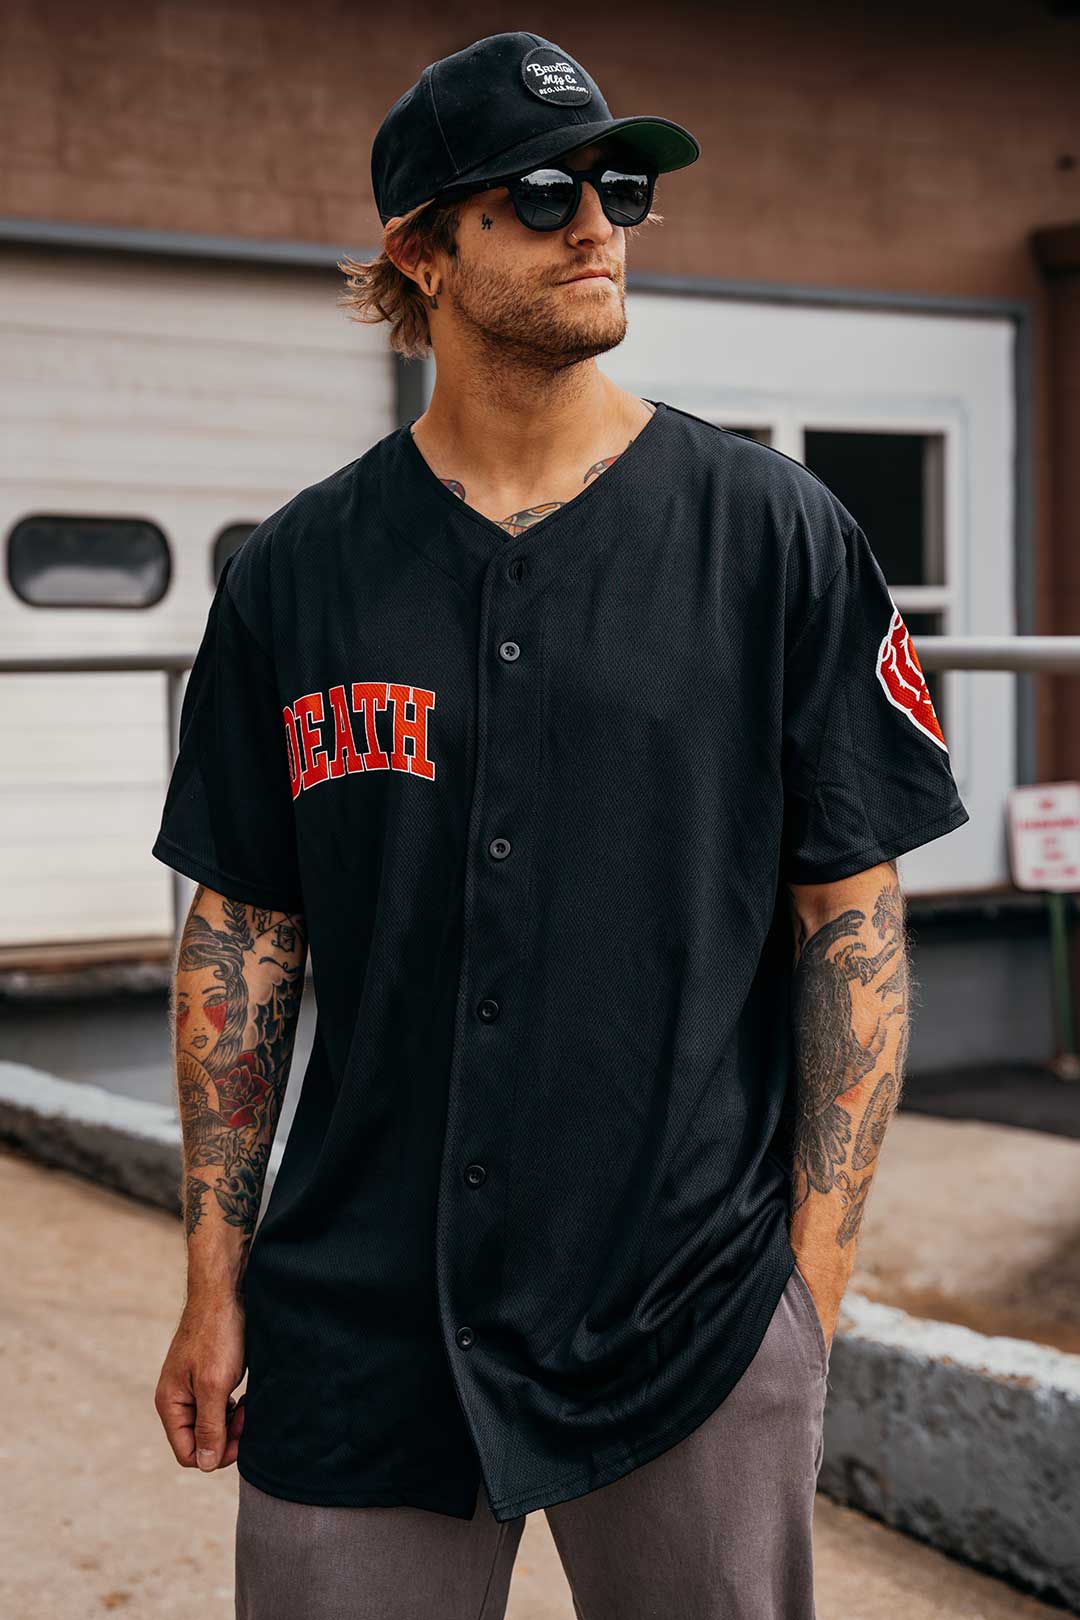 Death Baseball Jersey Goth Inspired